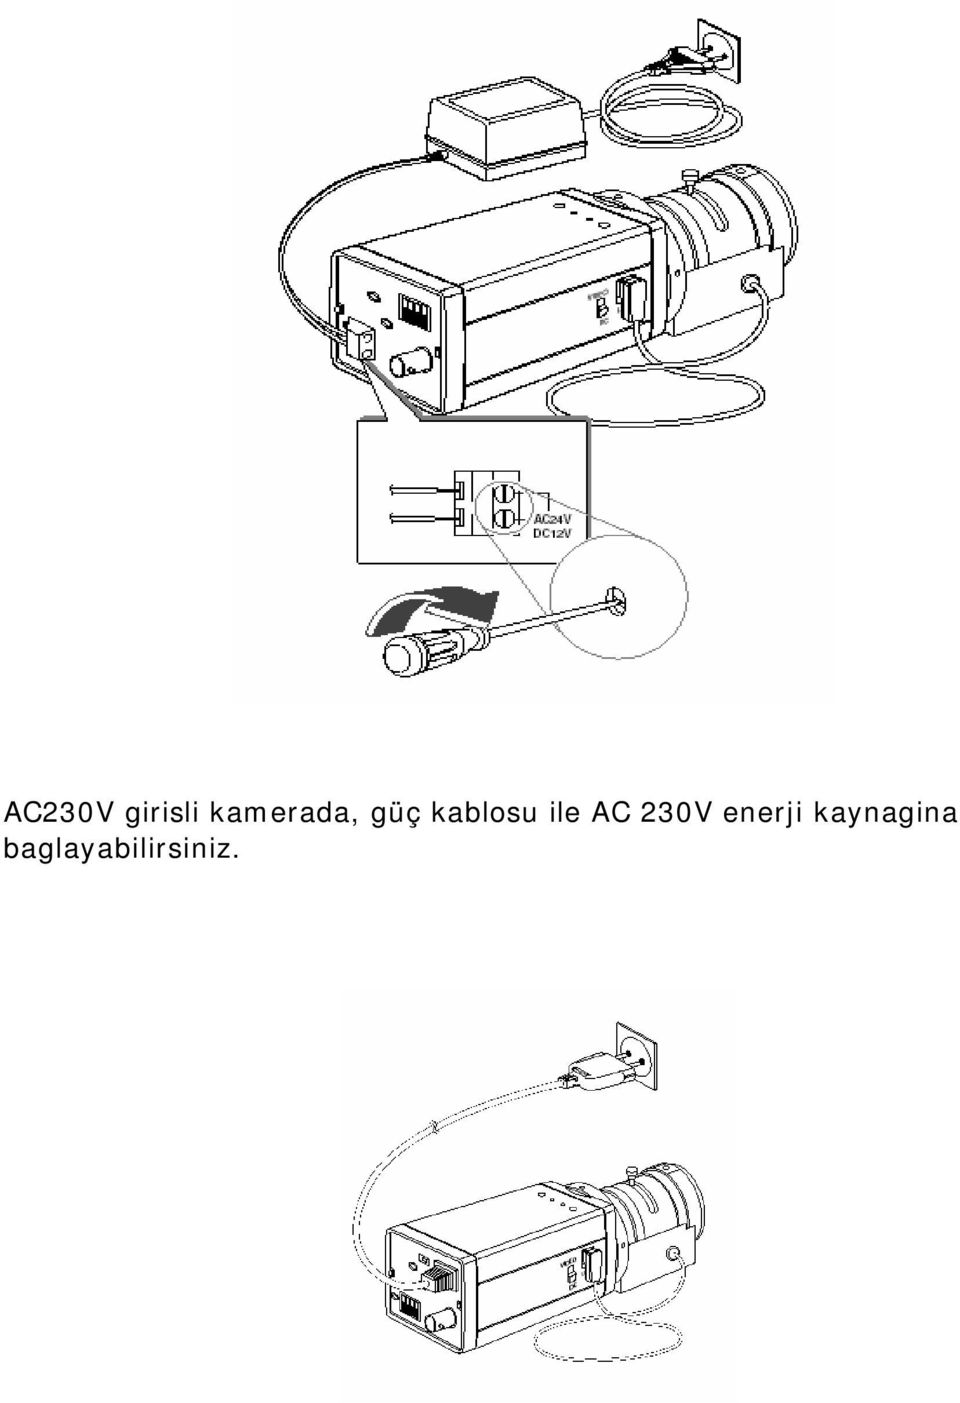 kablosu ile AC 230V